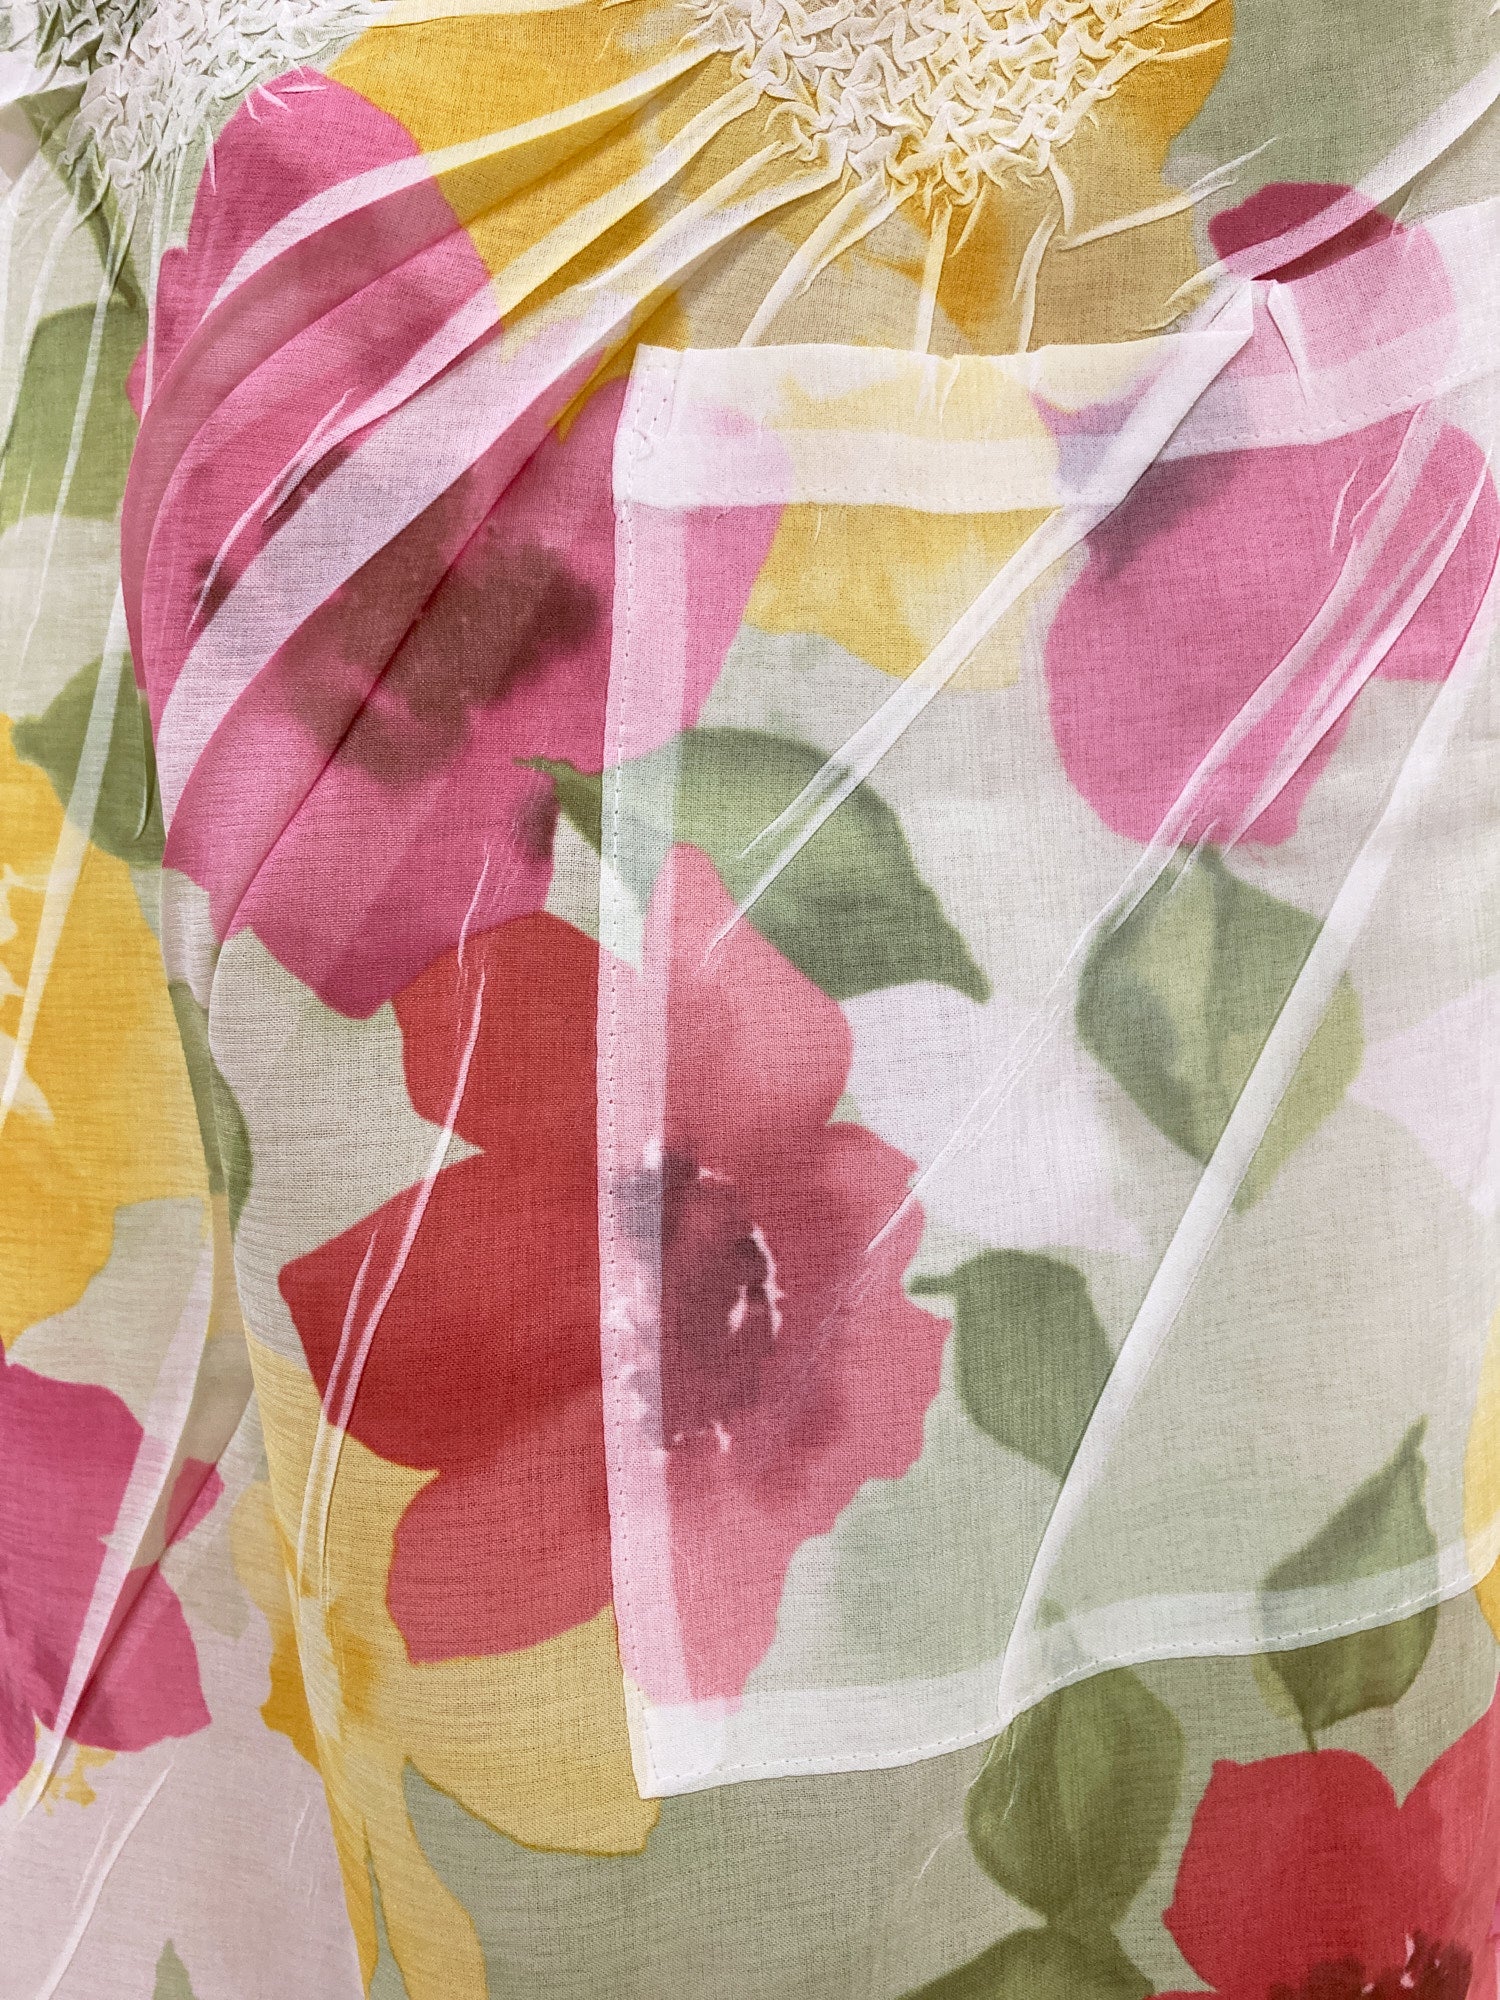 Yoshiki Hishinuma multicolour wrinkled polyester floral print apron